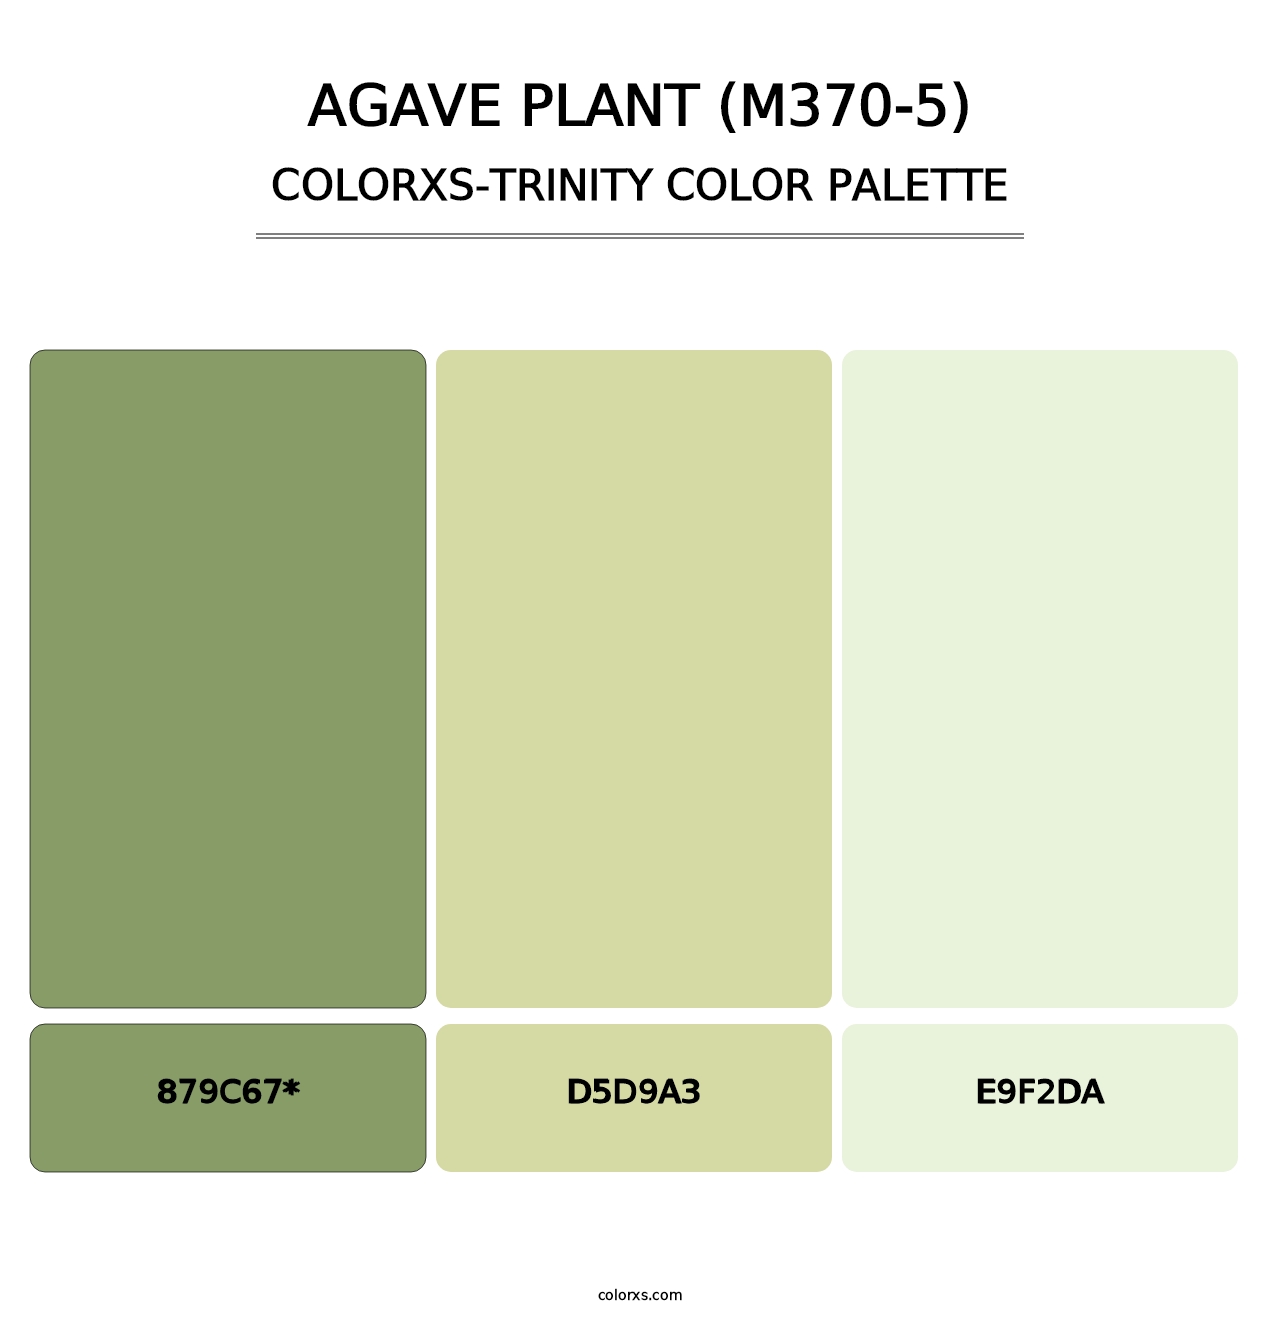 Agave Plant (M370-5) - Colorxs Trinity Palette